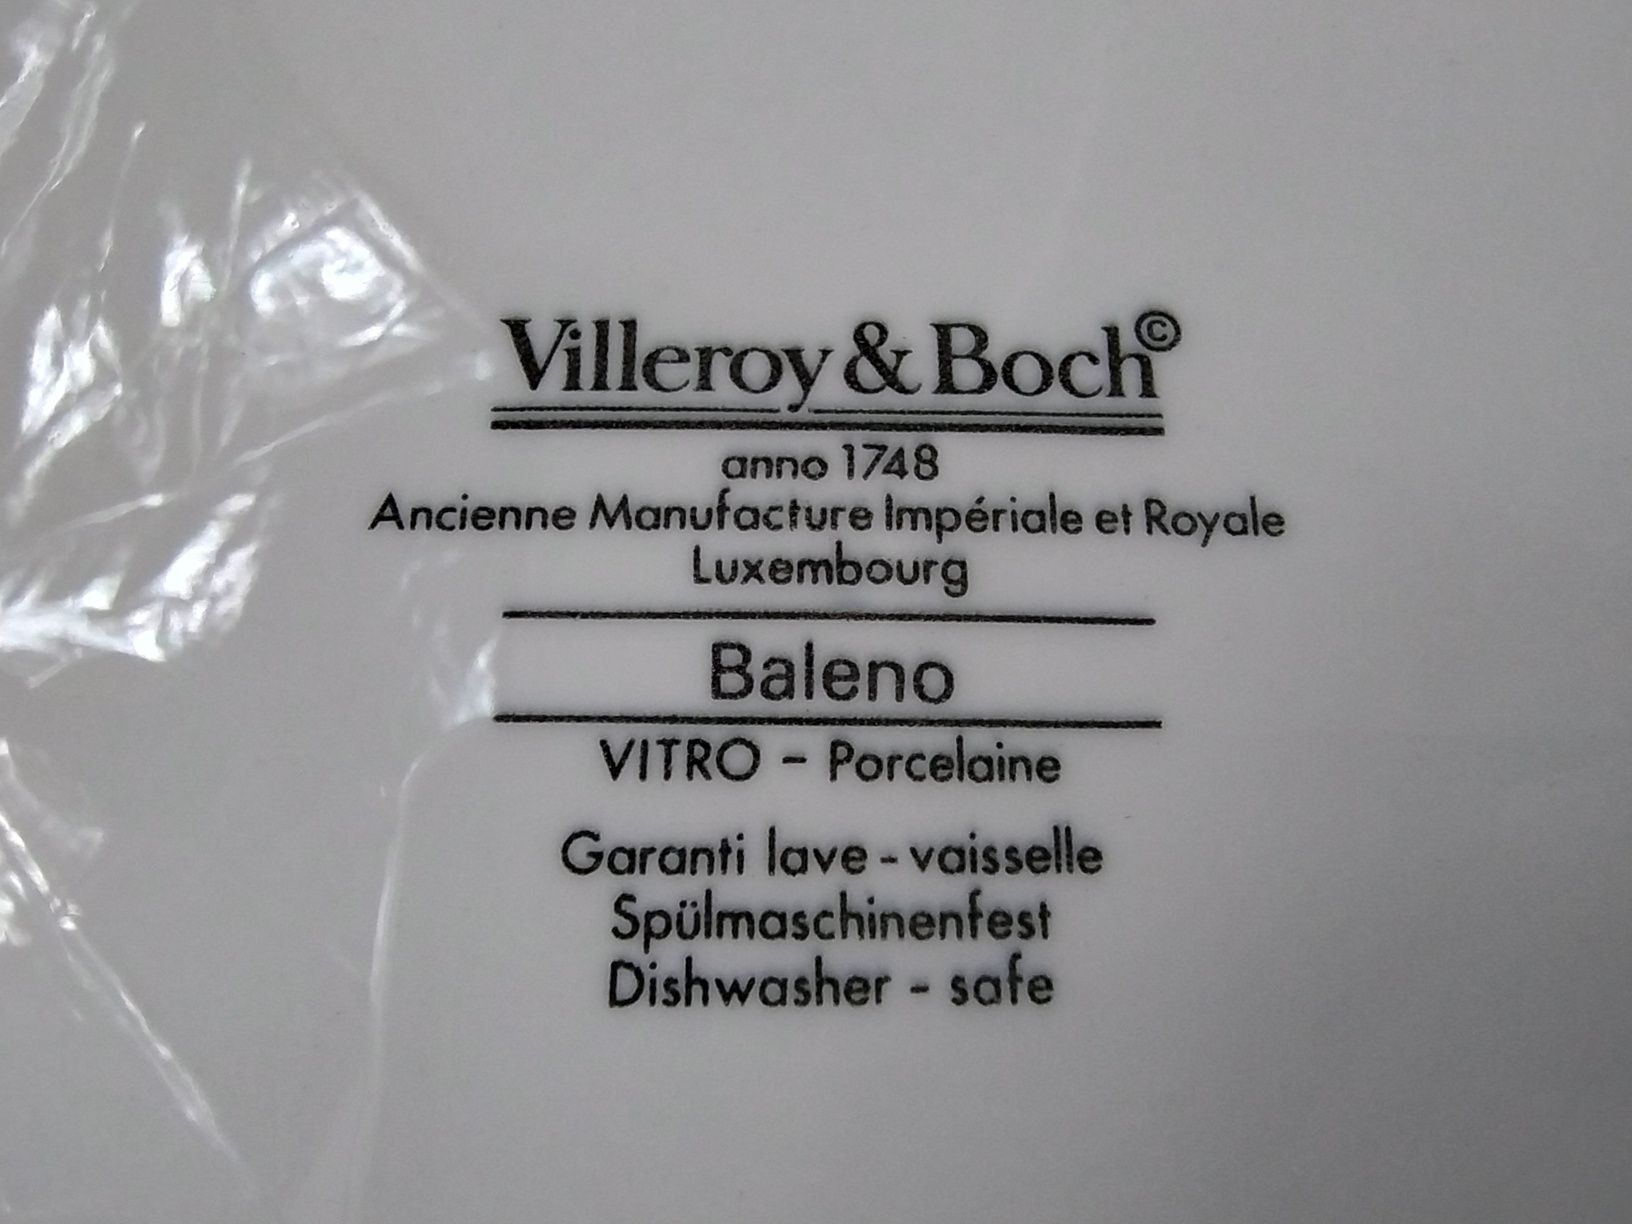 Serwis kawowy Villeroy & Boch. Baleno.